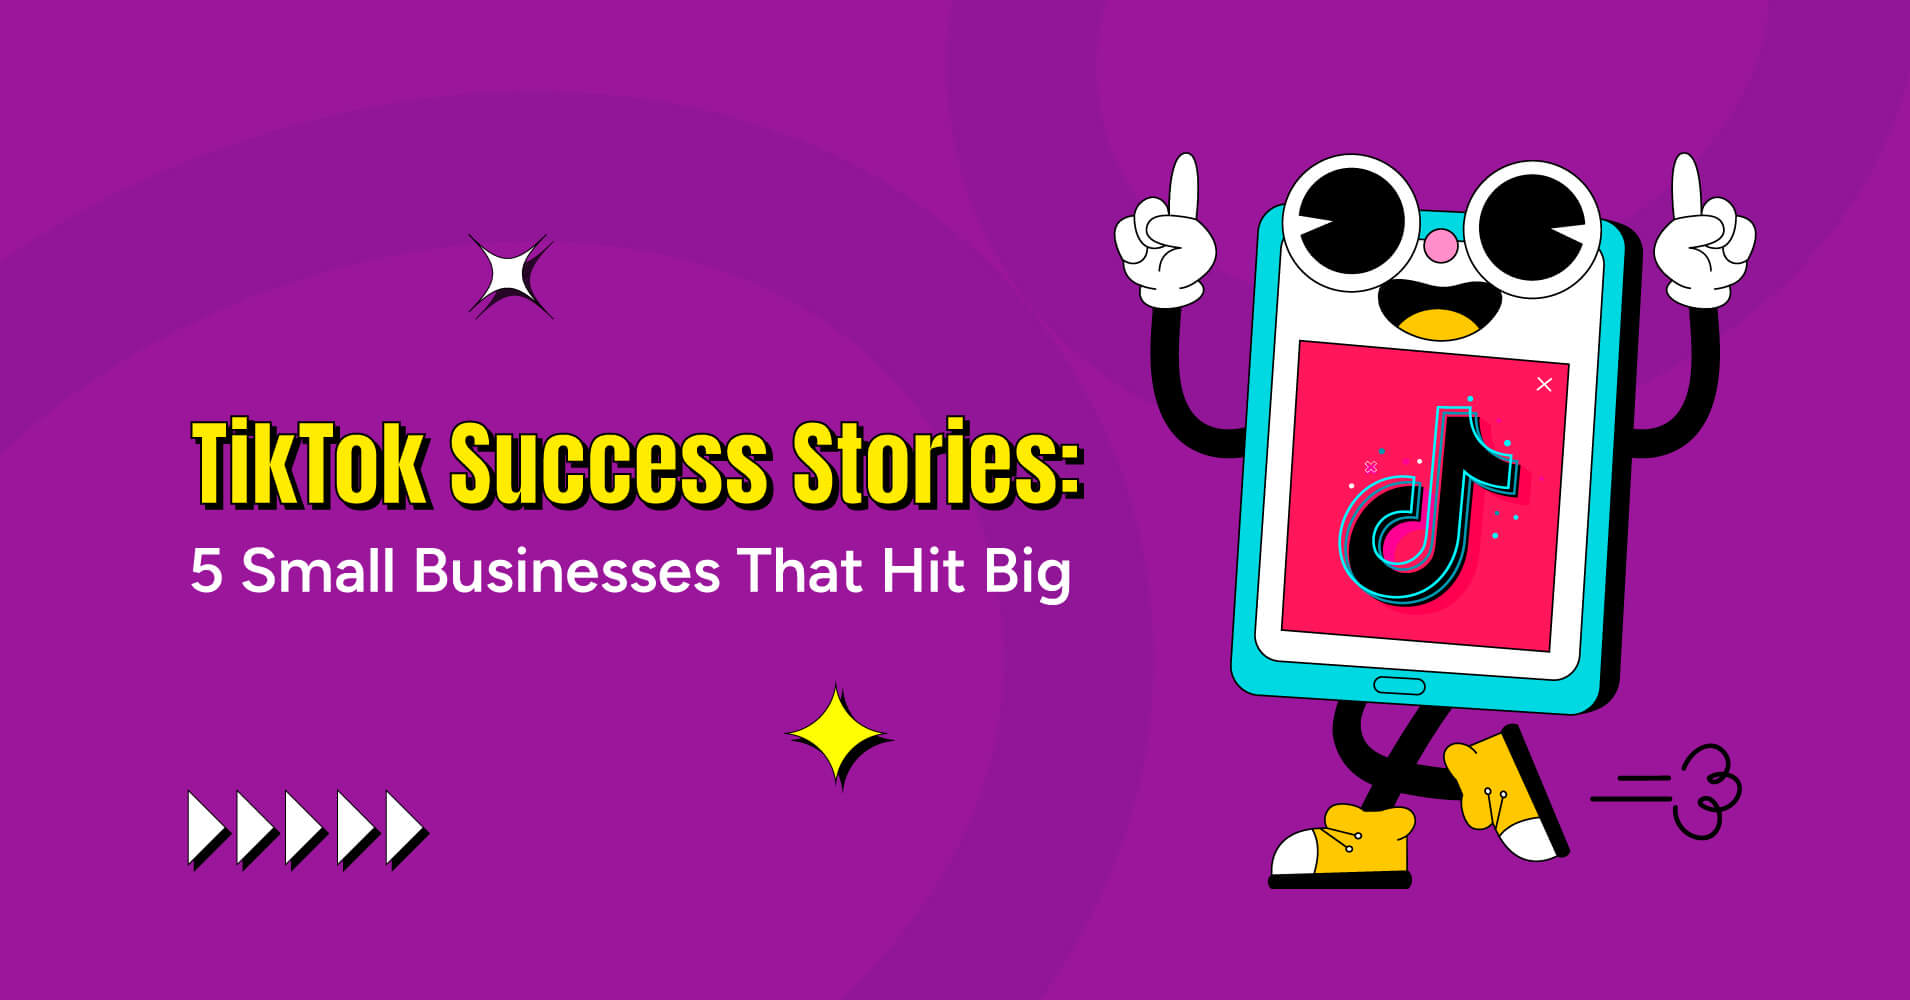 TikTok success stories. Case study on the brands that have grown popular through TikTok contents.